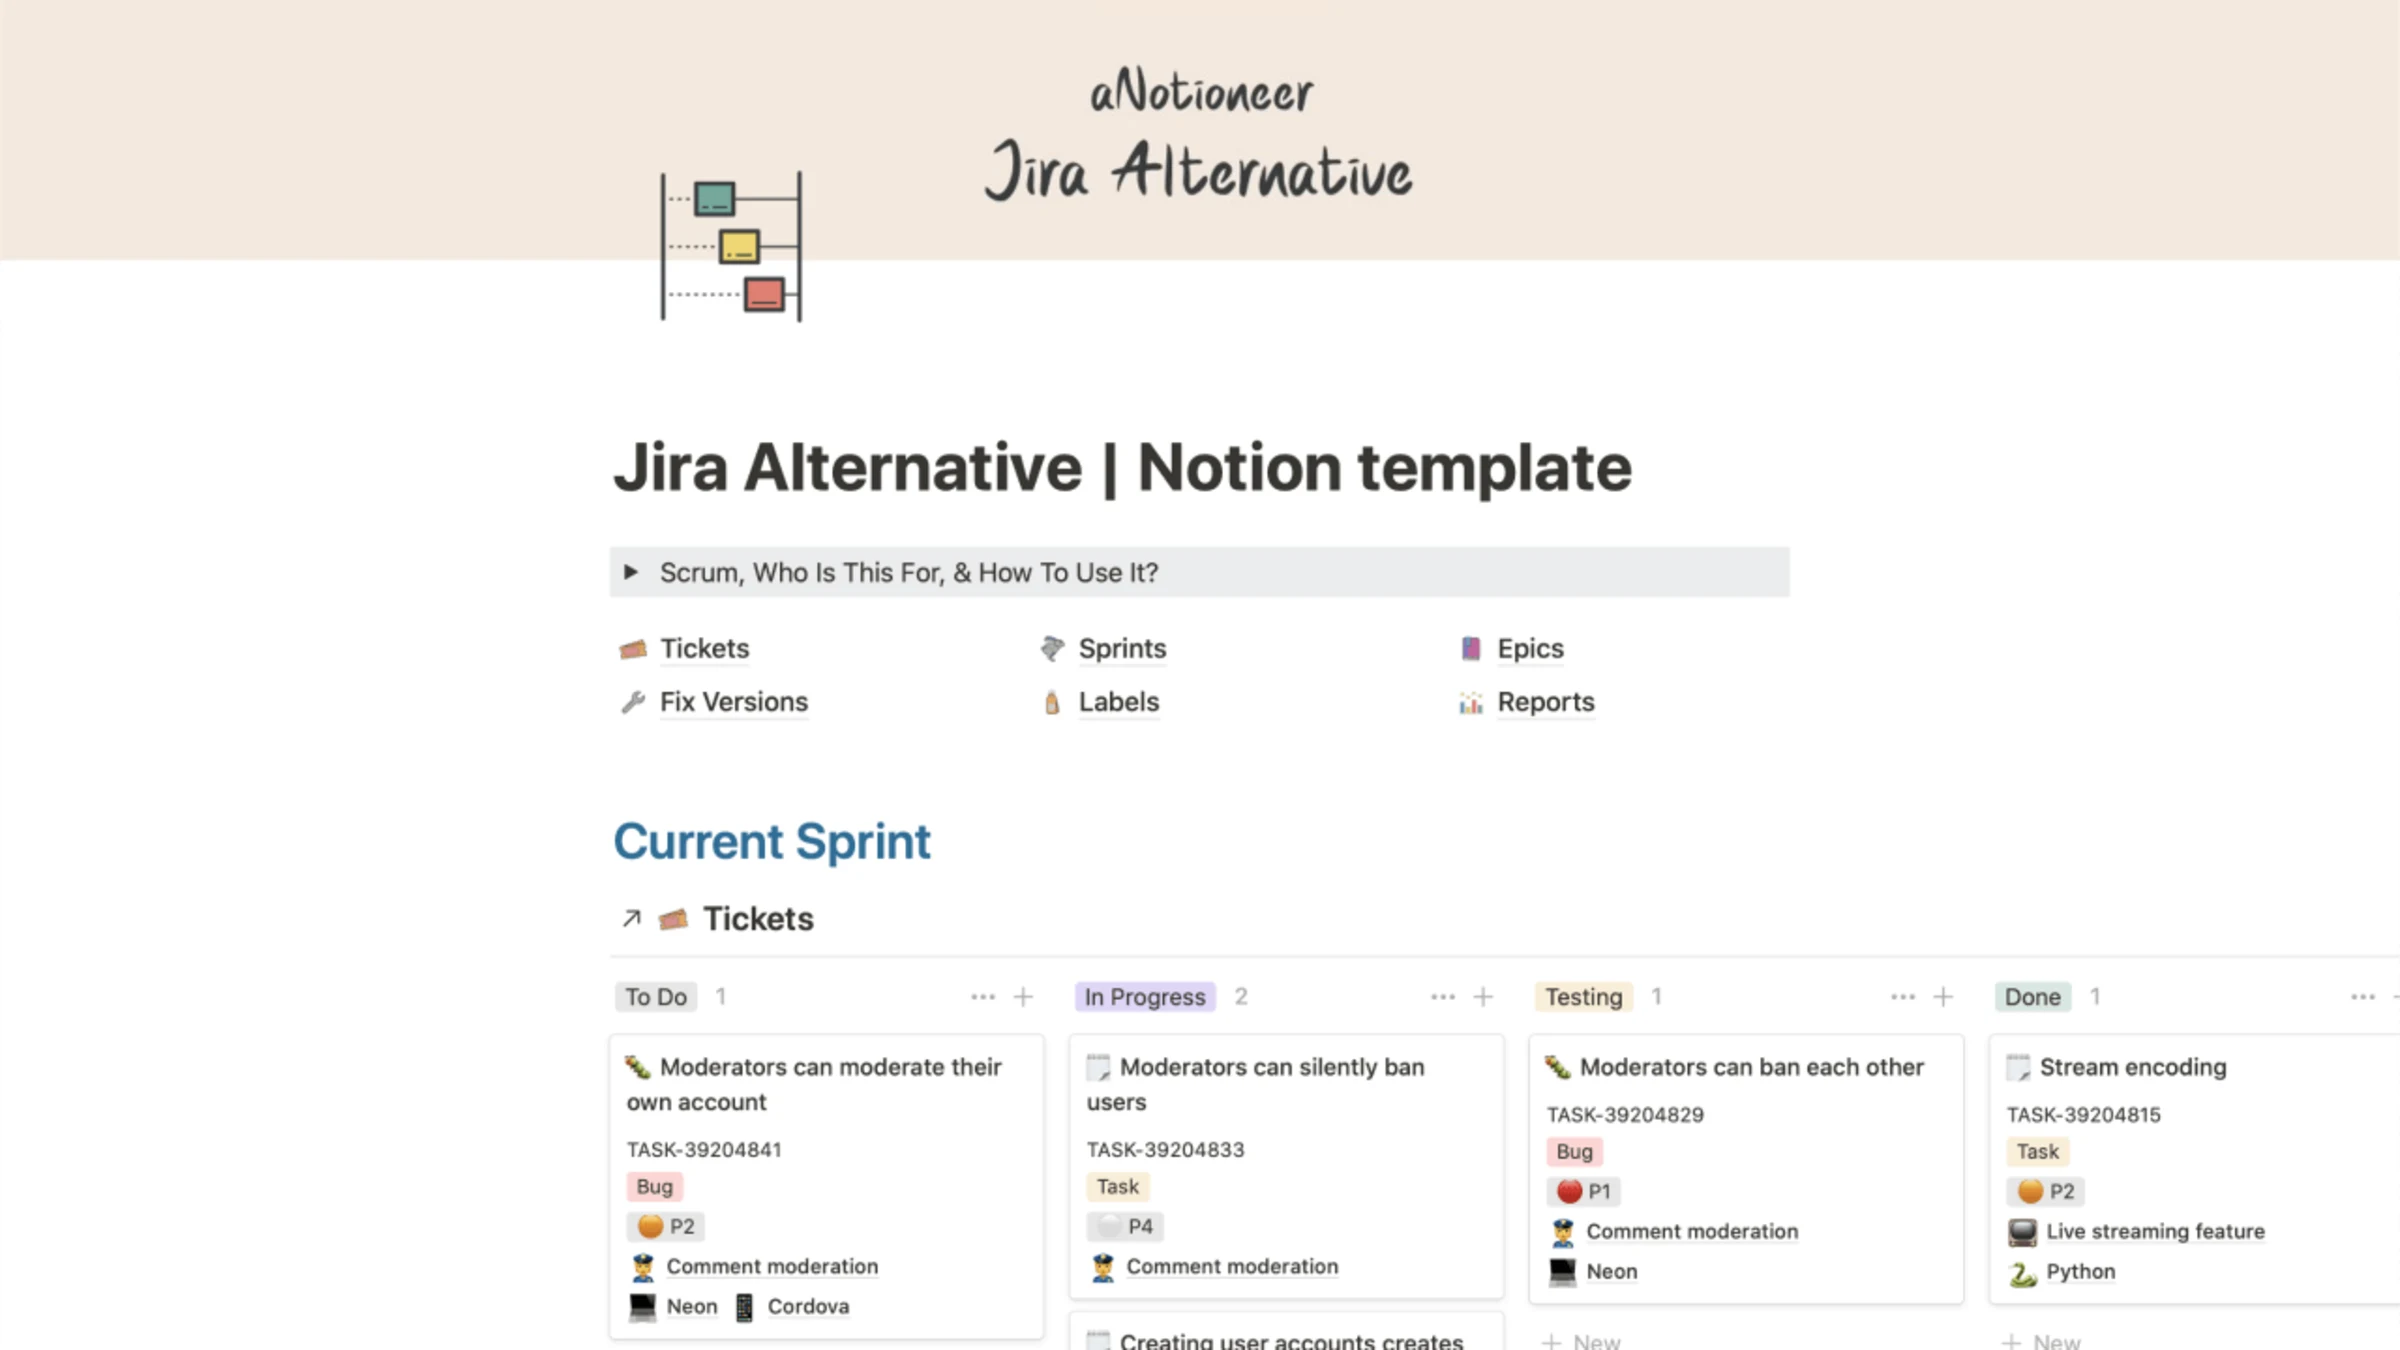 Jira Alternative